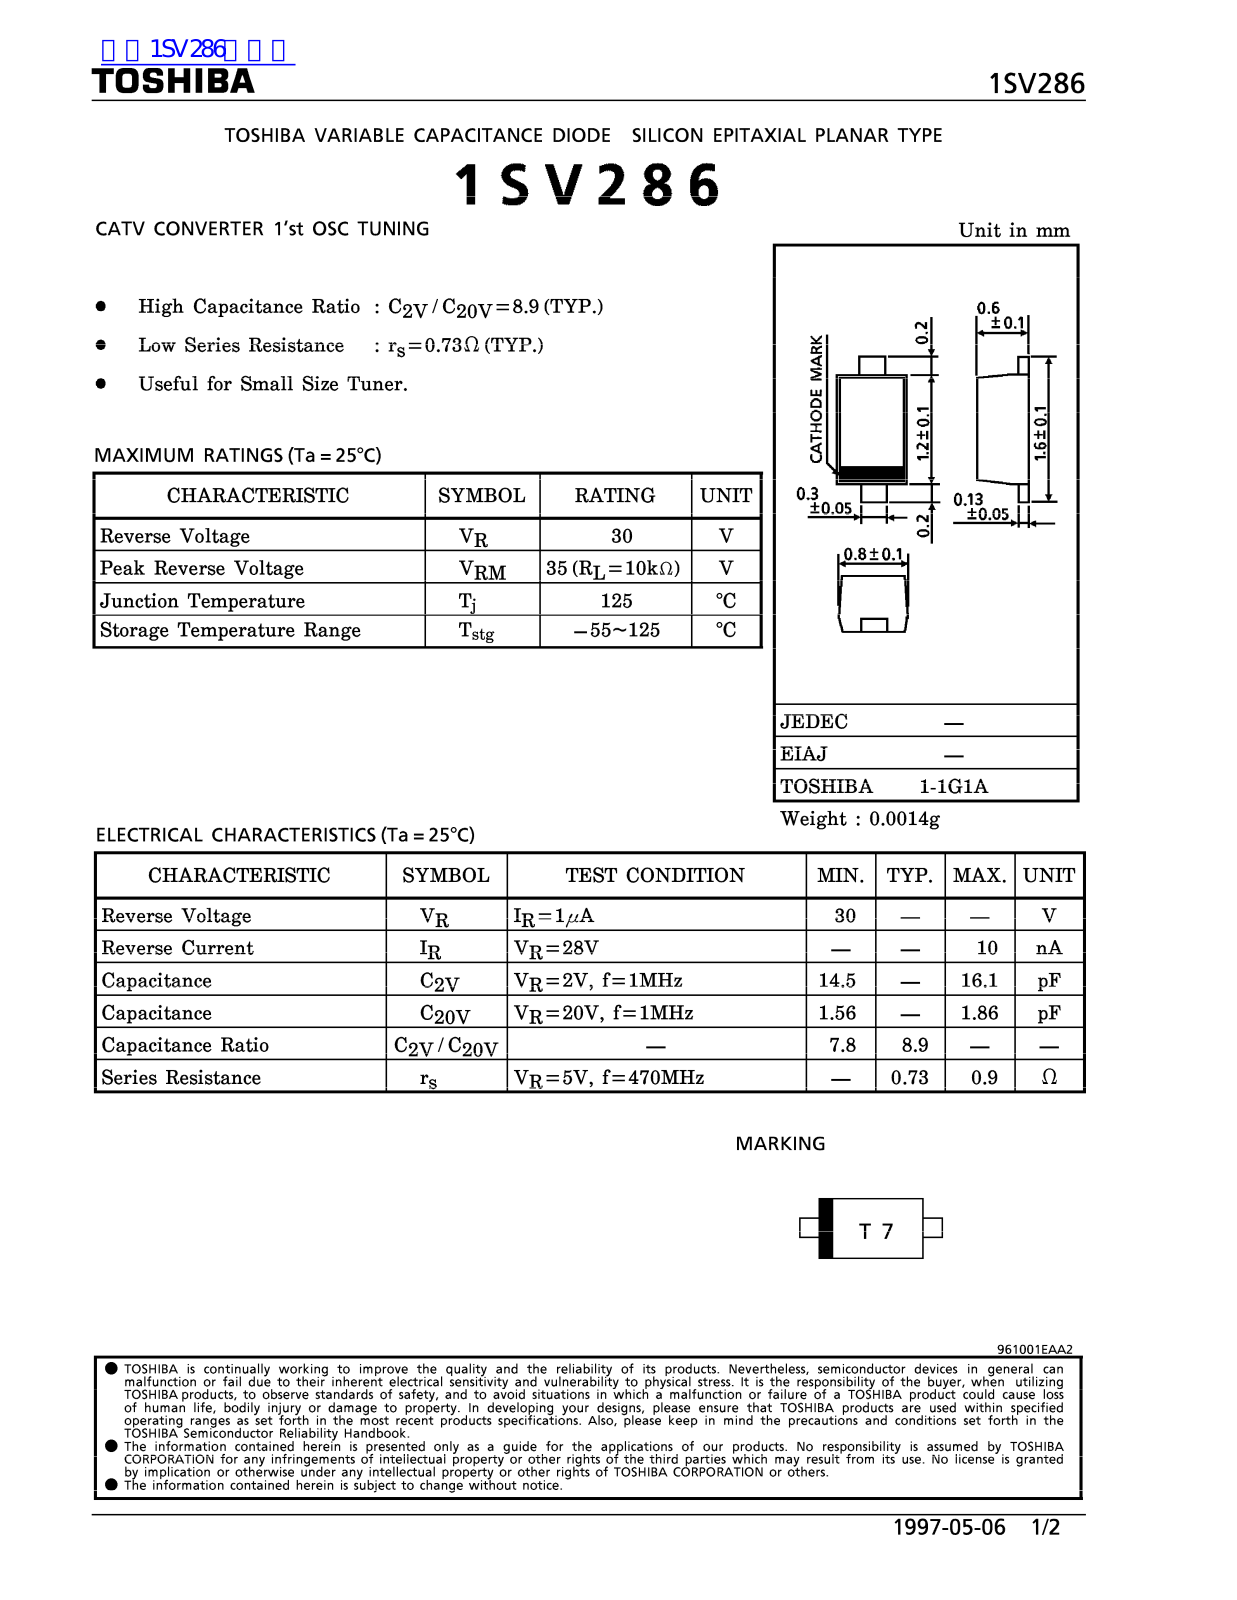 TOSHIBA 1SV286 Technical data